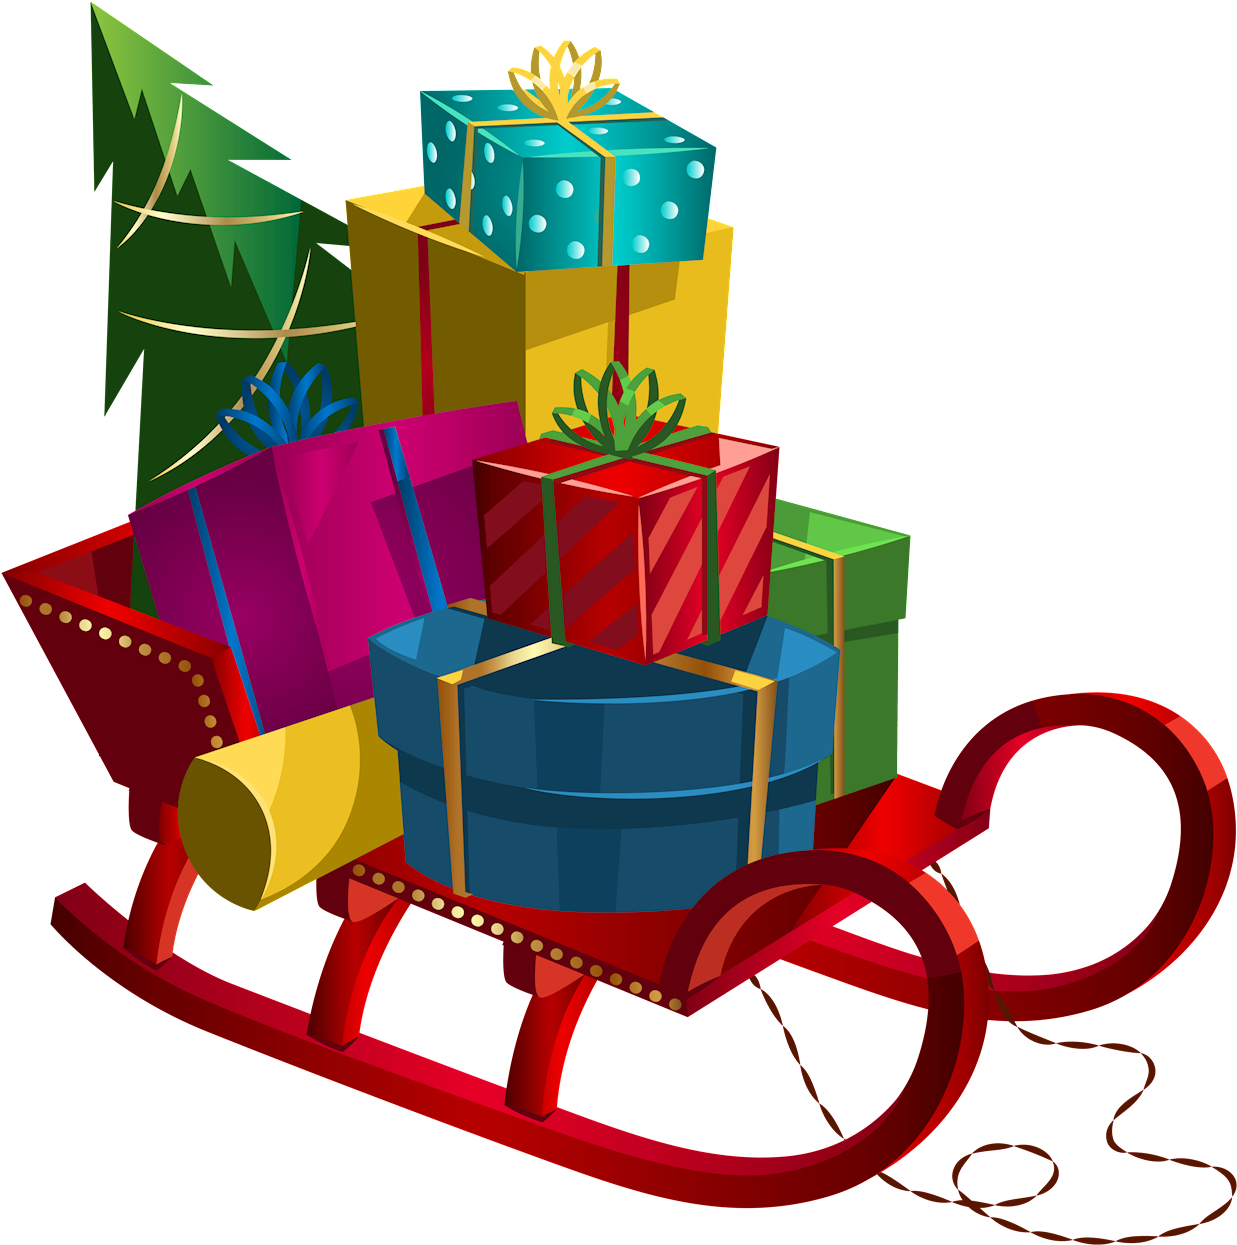 2018 Christmas Cheer Fund - Christmas Sleigh With Presents (1272x1280)